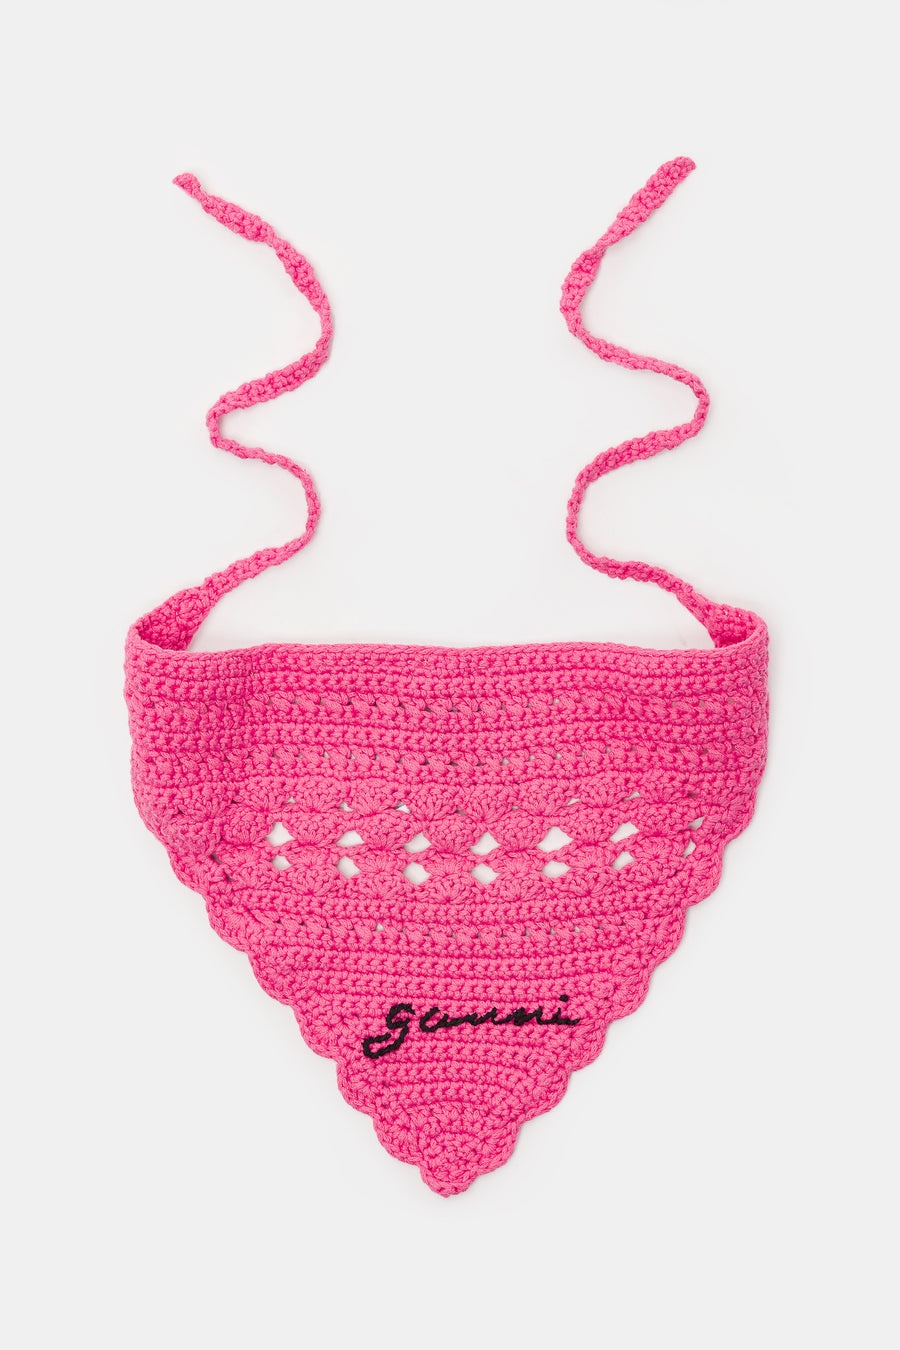 Cotton Crochet Bandana in Shocking Pink - 1